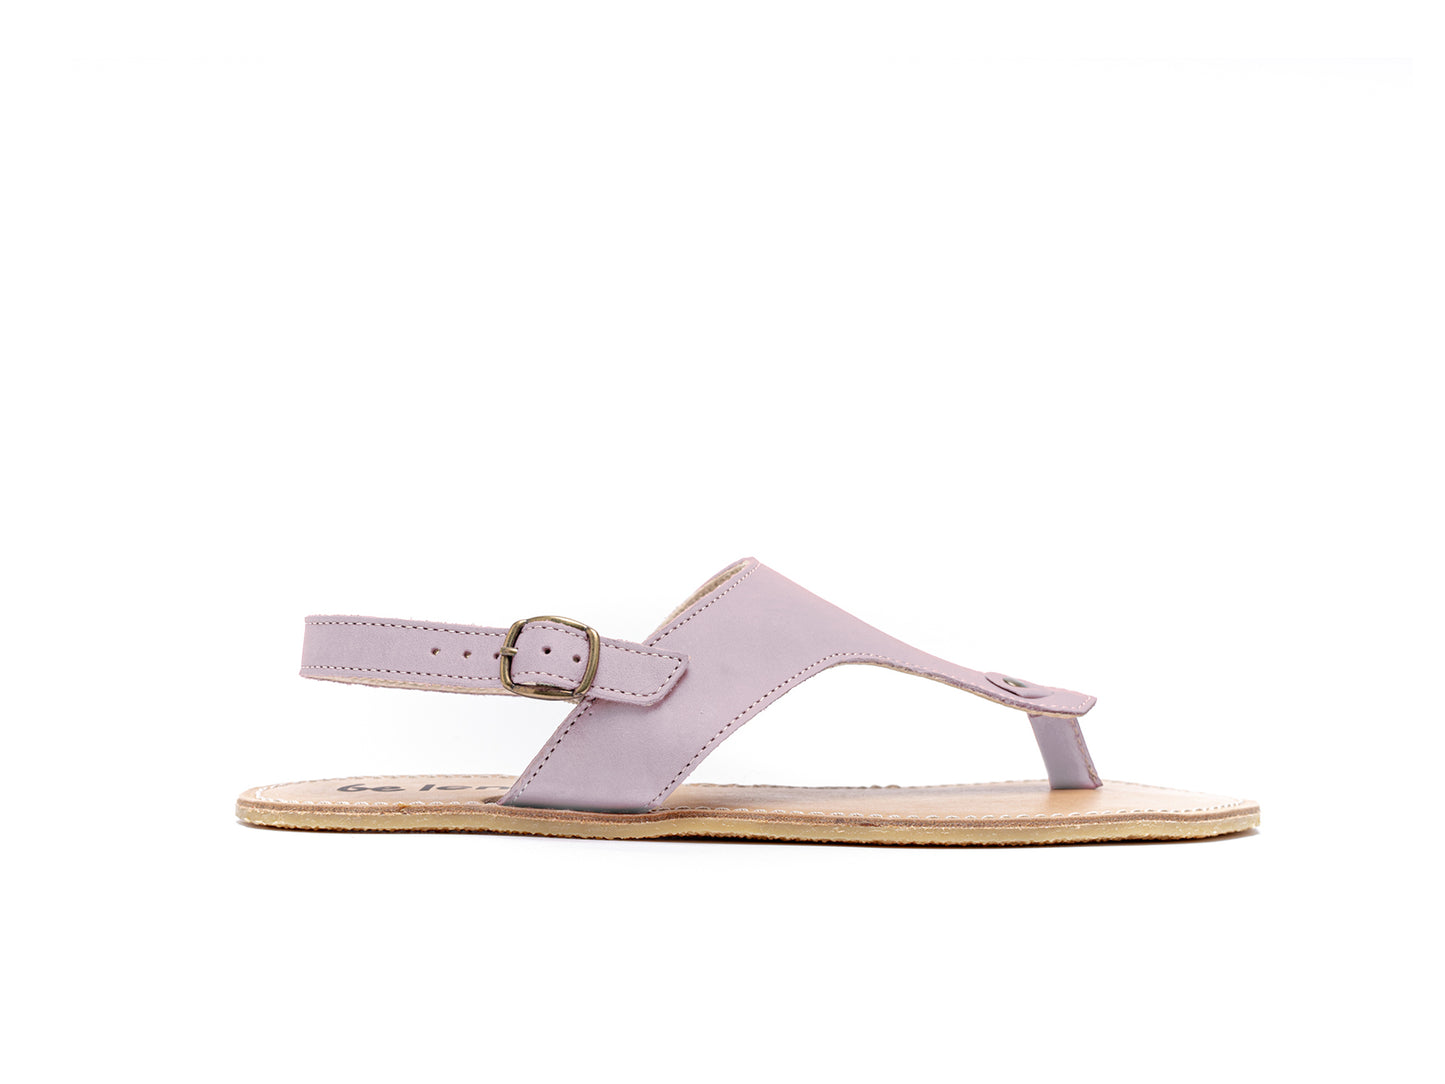 Barefoot sandále Be Lenka Promenade - Light Lilac